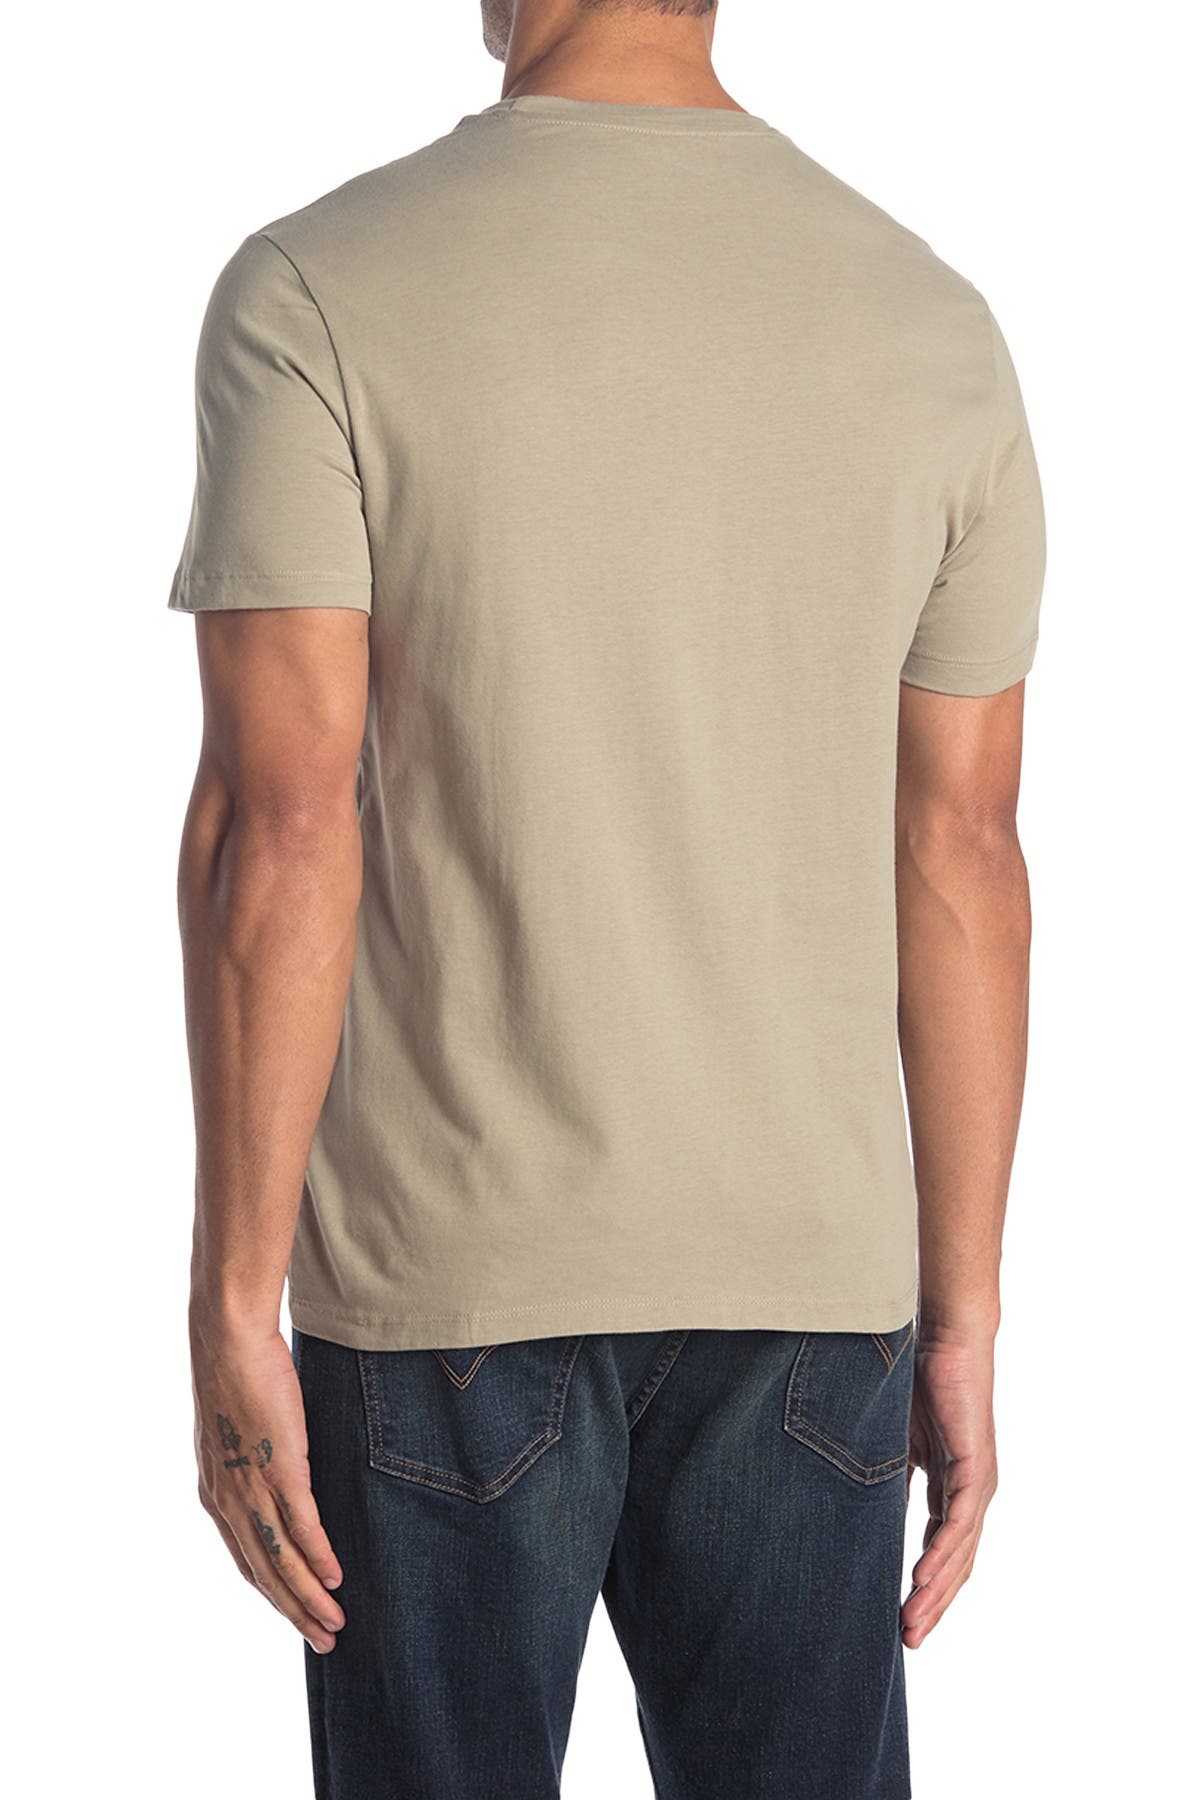 Allsaints Hale Crew Neck T-shirt In Sutro Grey